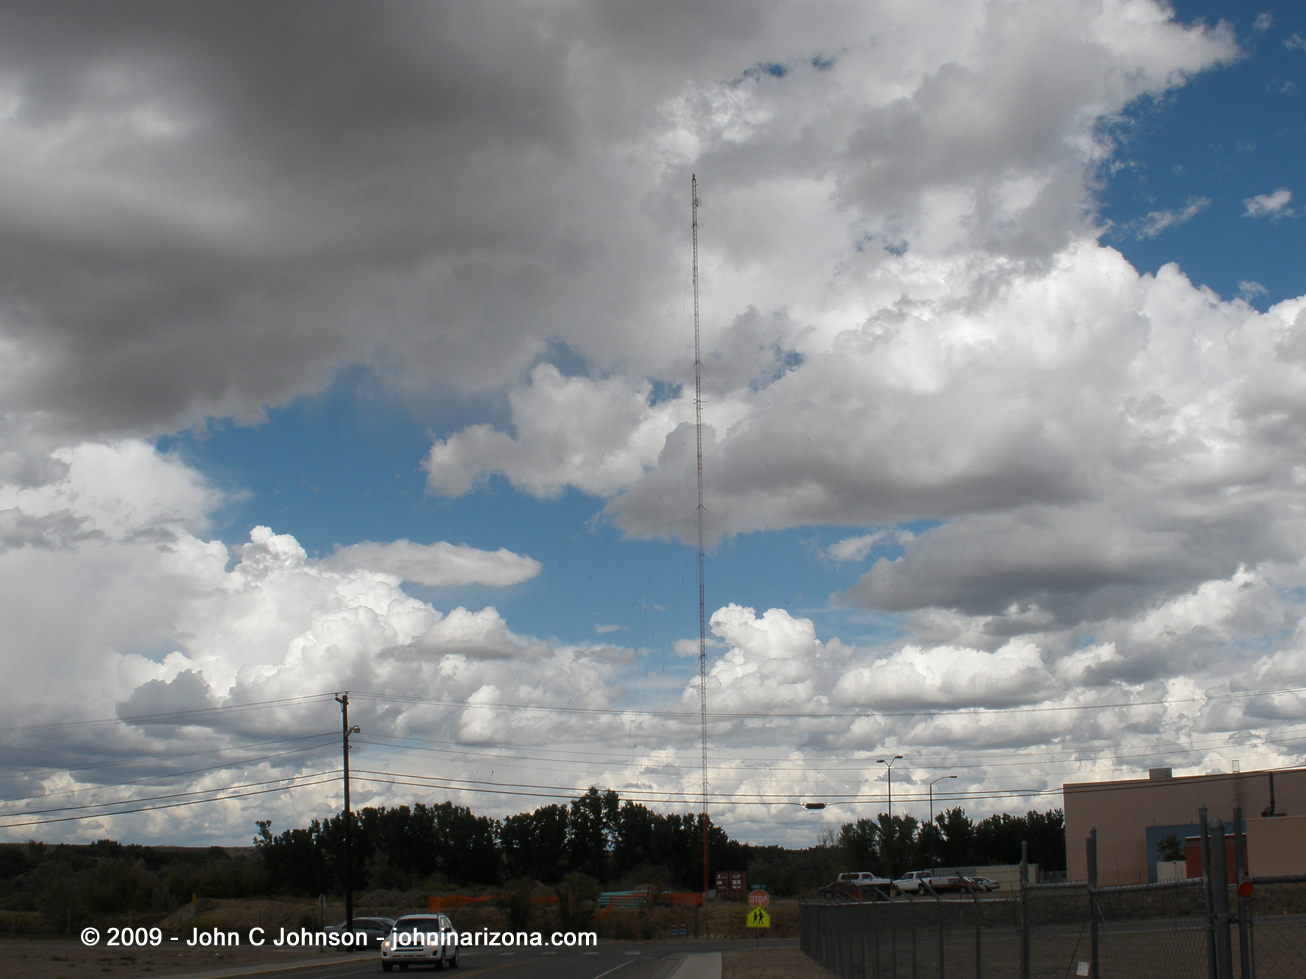 KCQL Radio 1340 Aztec, New Mexico